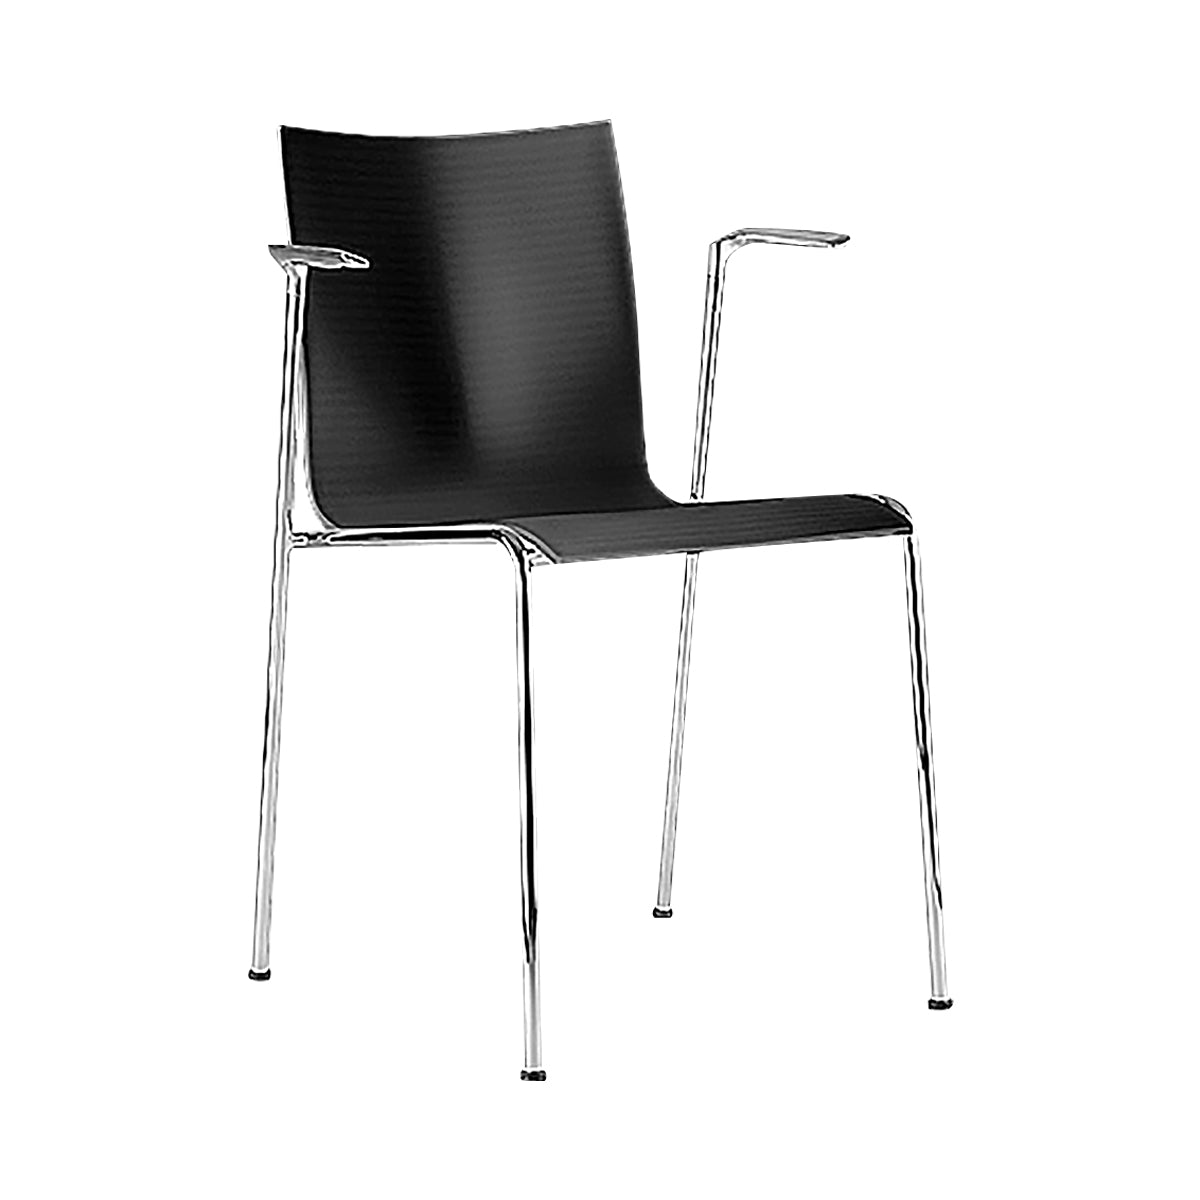 Chairik 113 Armchair: 4-Legs + Plastic + Black